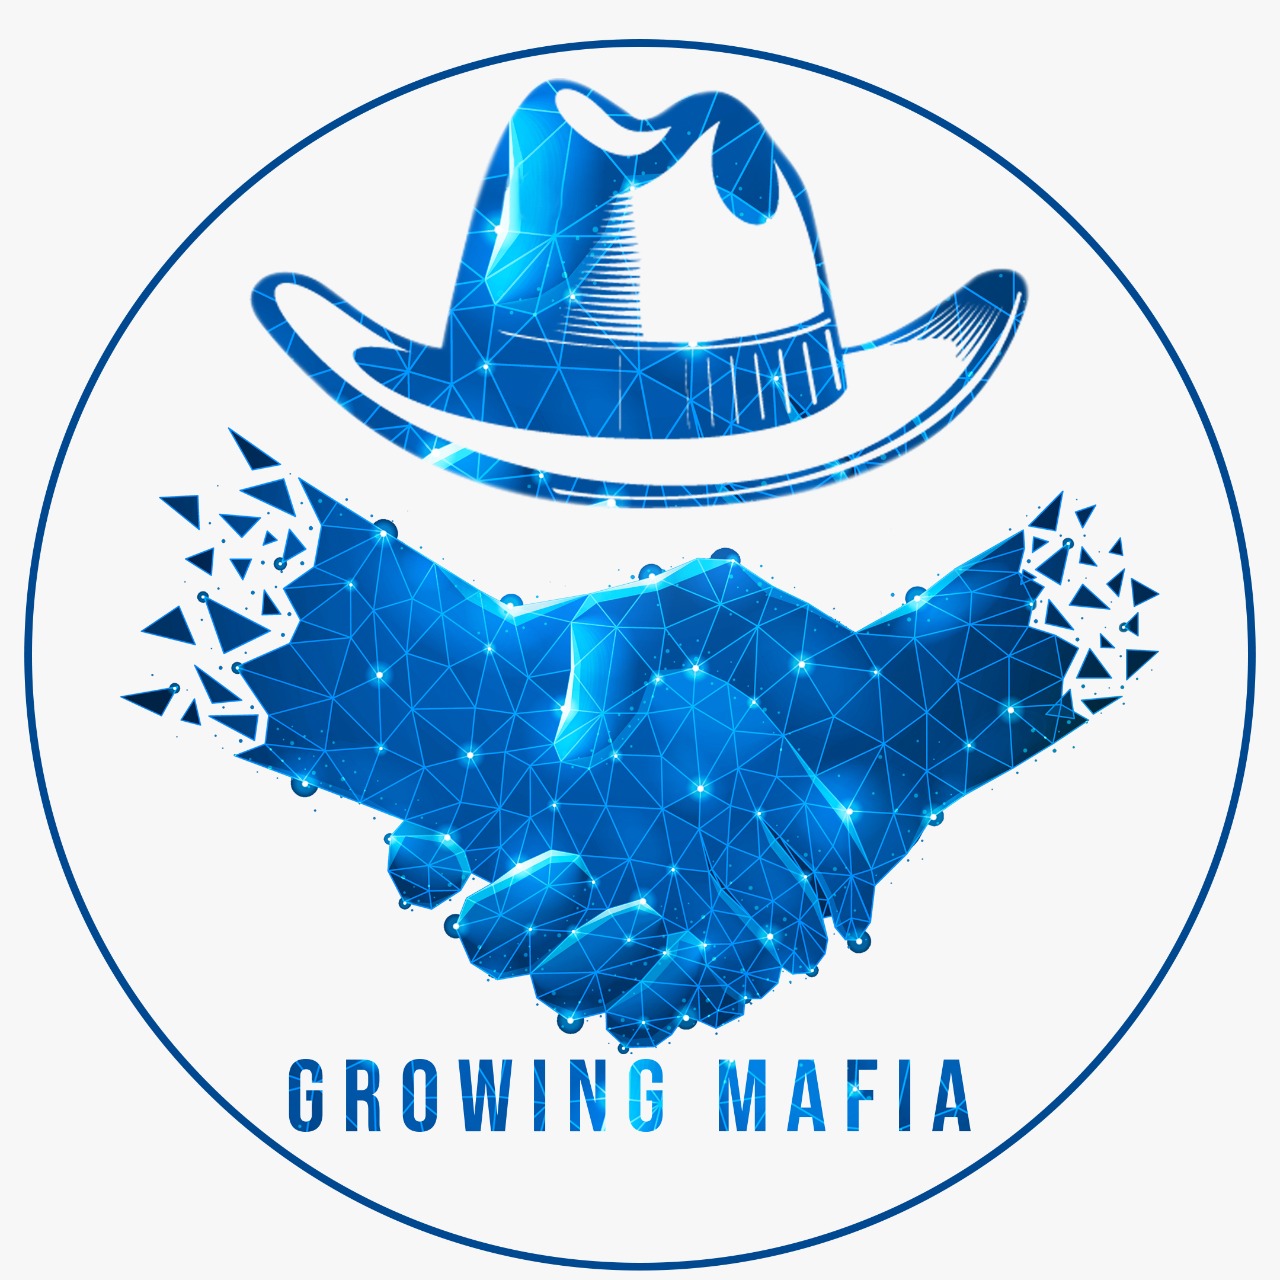 Indias most trusted Marketing Agency – Growing Mafia